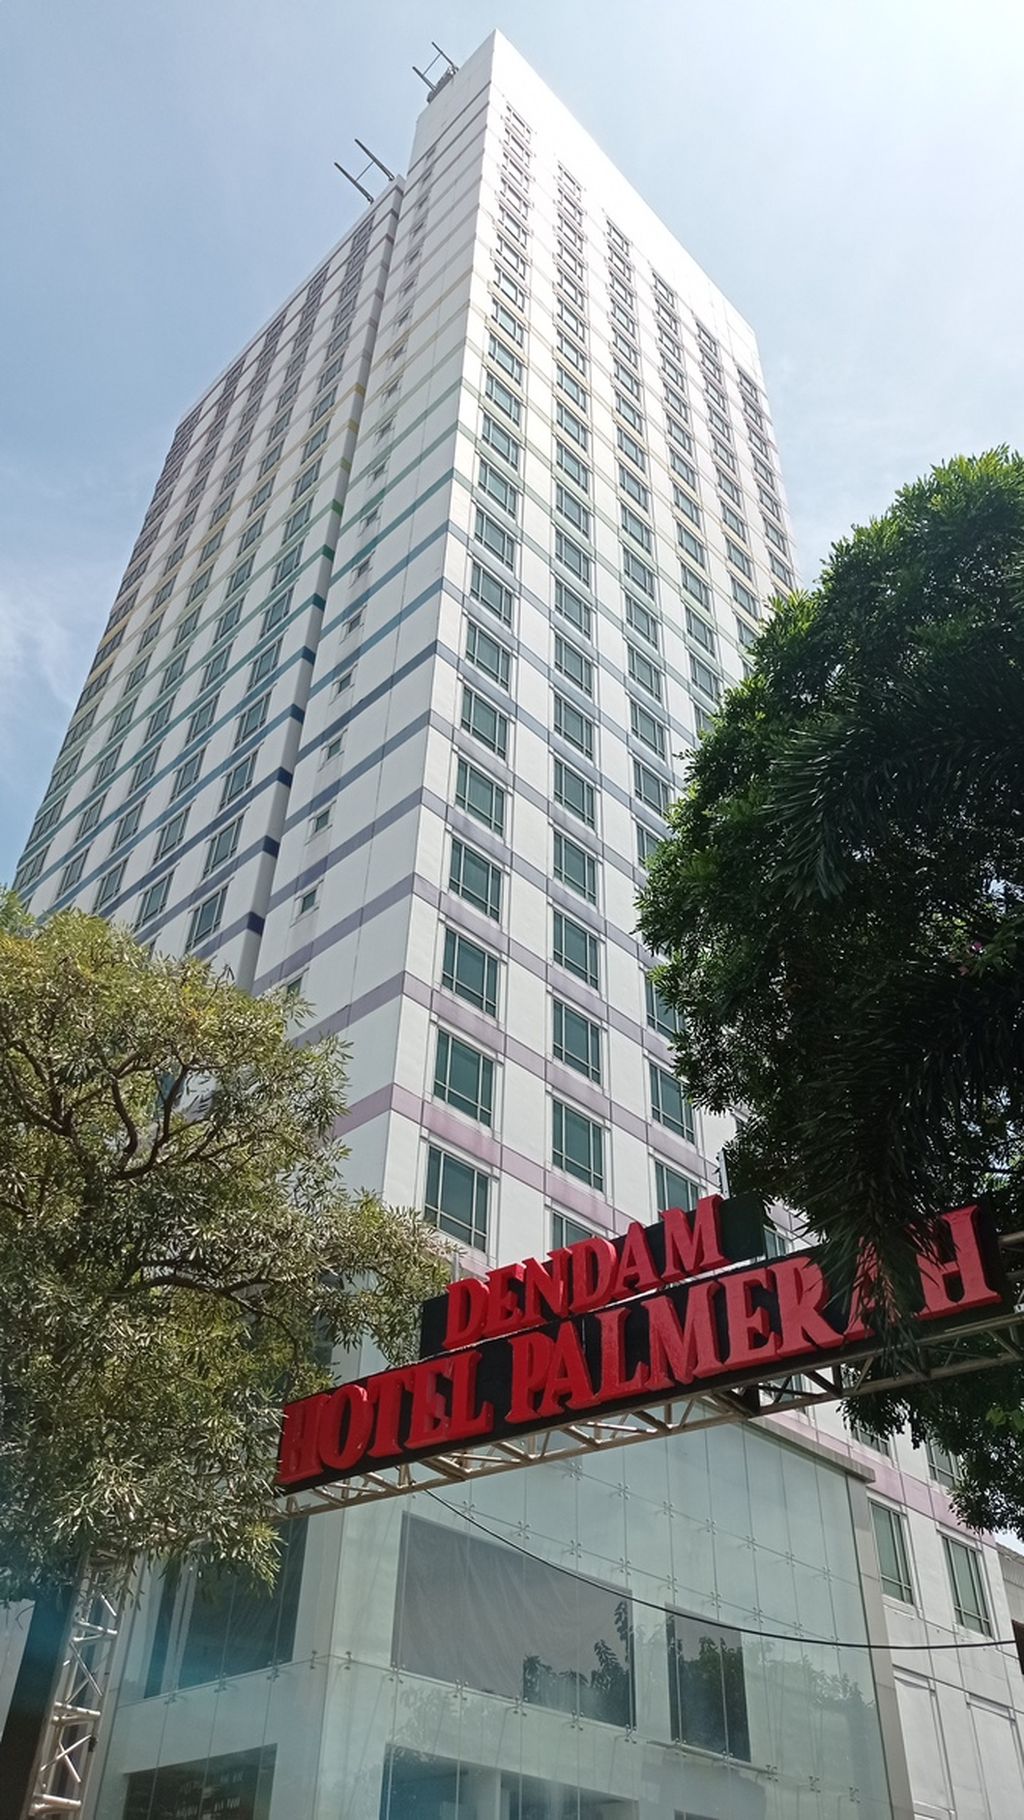 Dendam Hotel Palmerah, wahana hotel horor di Twin Plaza Hotel, Jakarta Barat, Minggu (30/10/2022). Dendam Hotel Palmerah bisa dinikmati mulai 30 Oktober hingga 30 November. Setiap hari wahana dibuka pukul 11.00 sampai pukul 23.00.